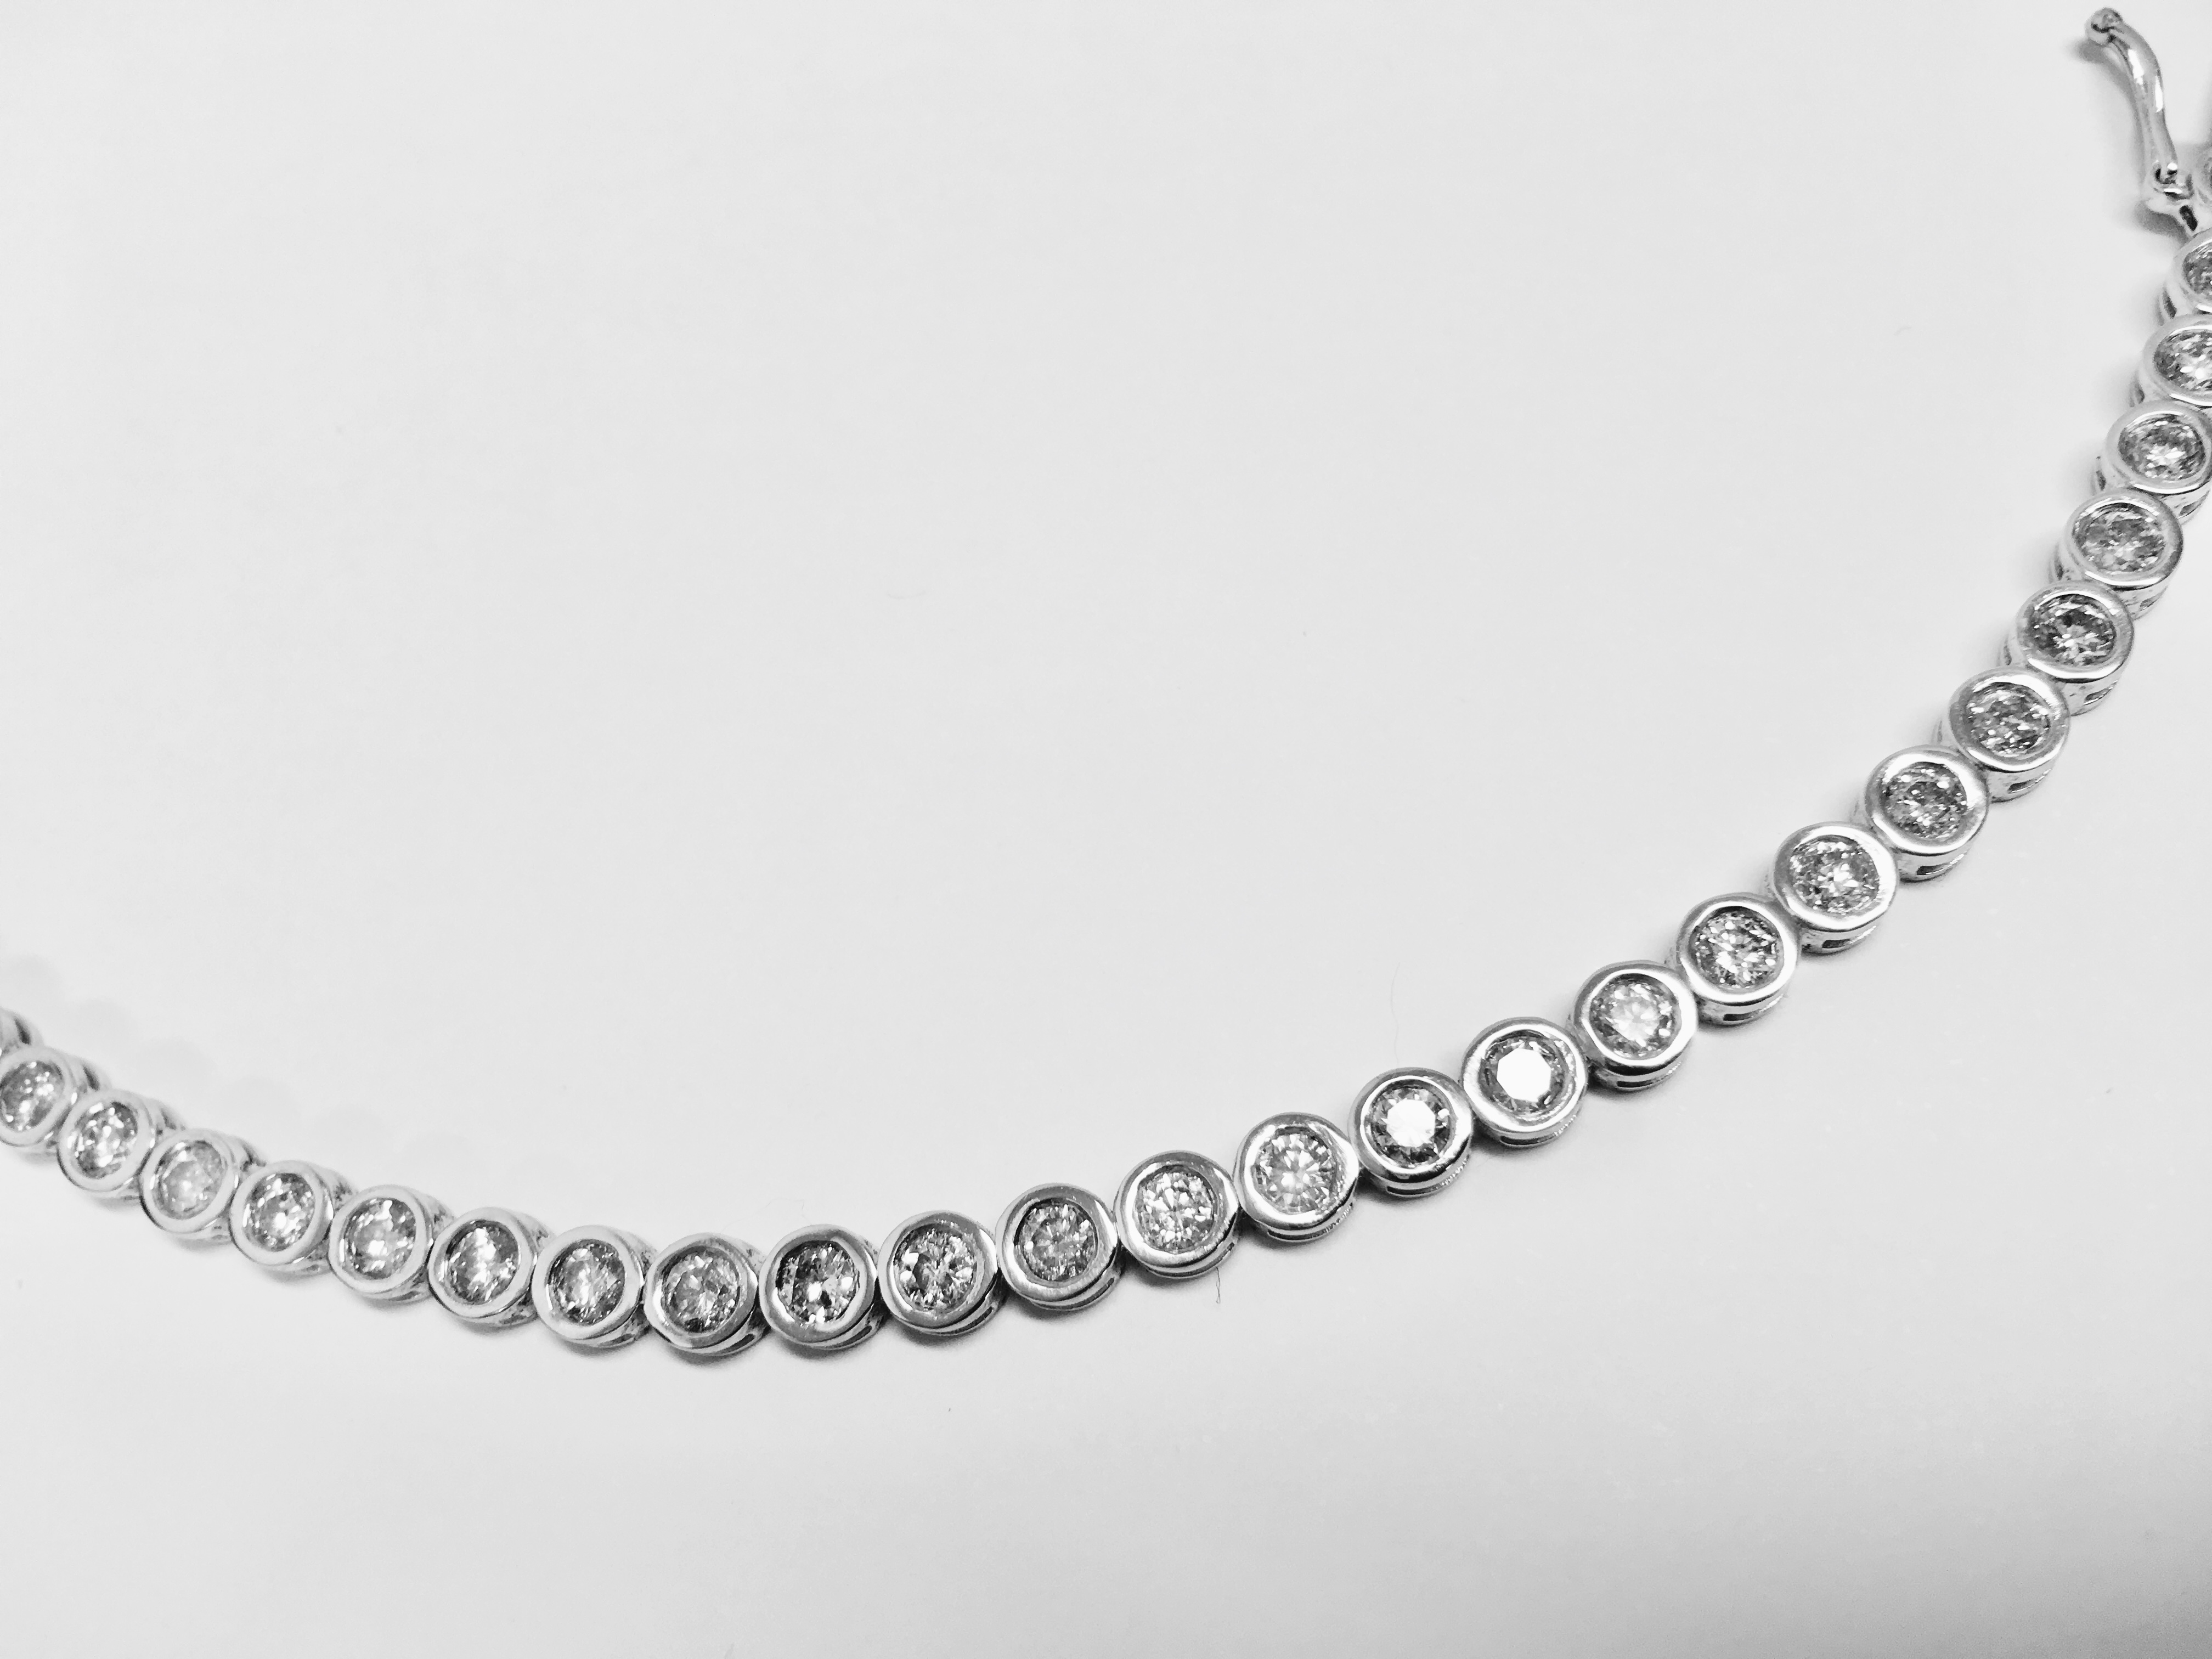 3.50ct tennis style bracelet set with brilliant cut diamonds - Image 5 of 5